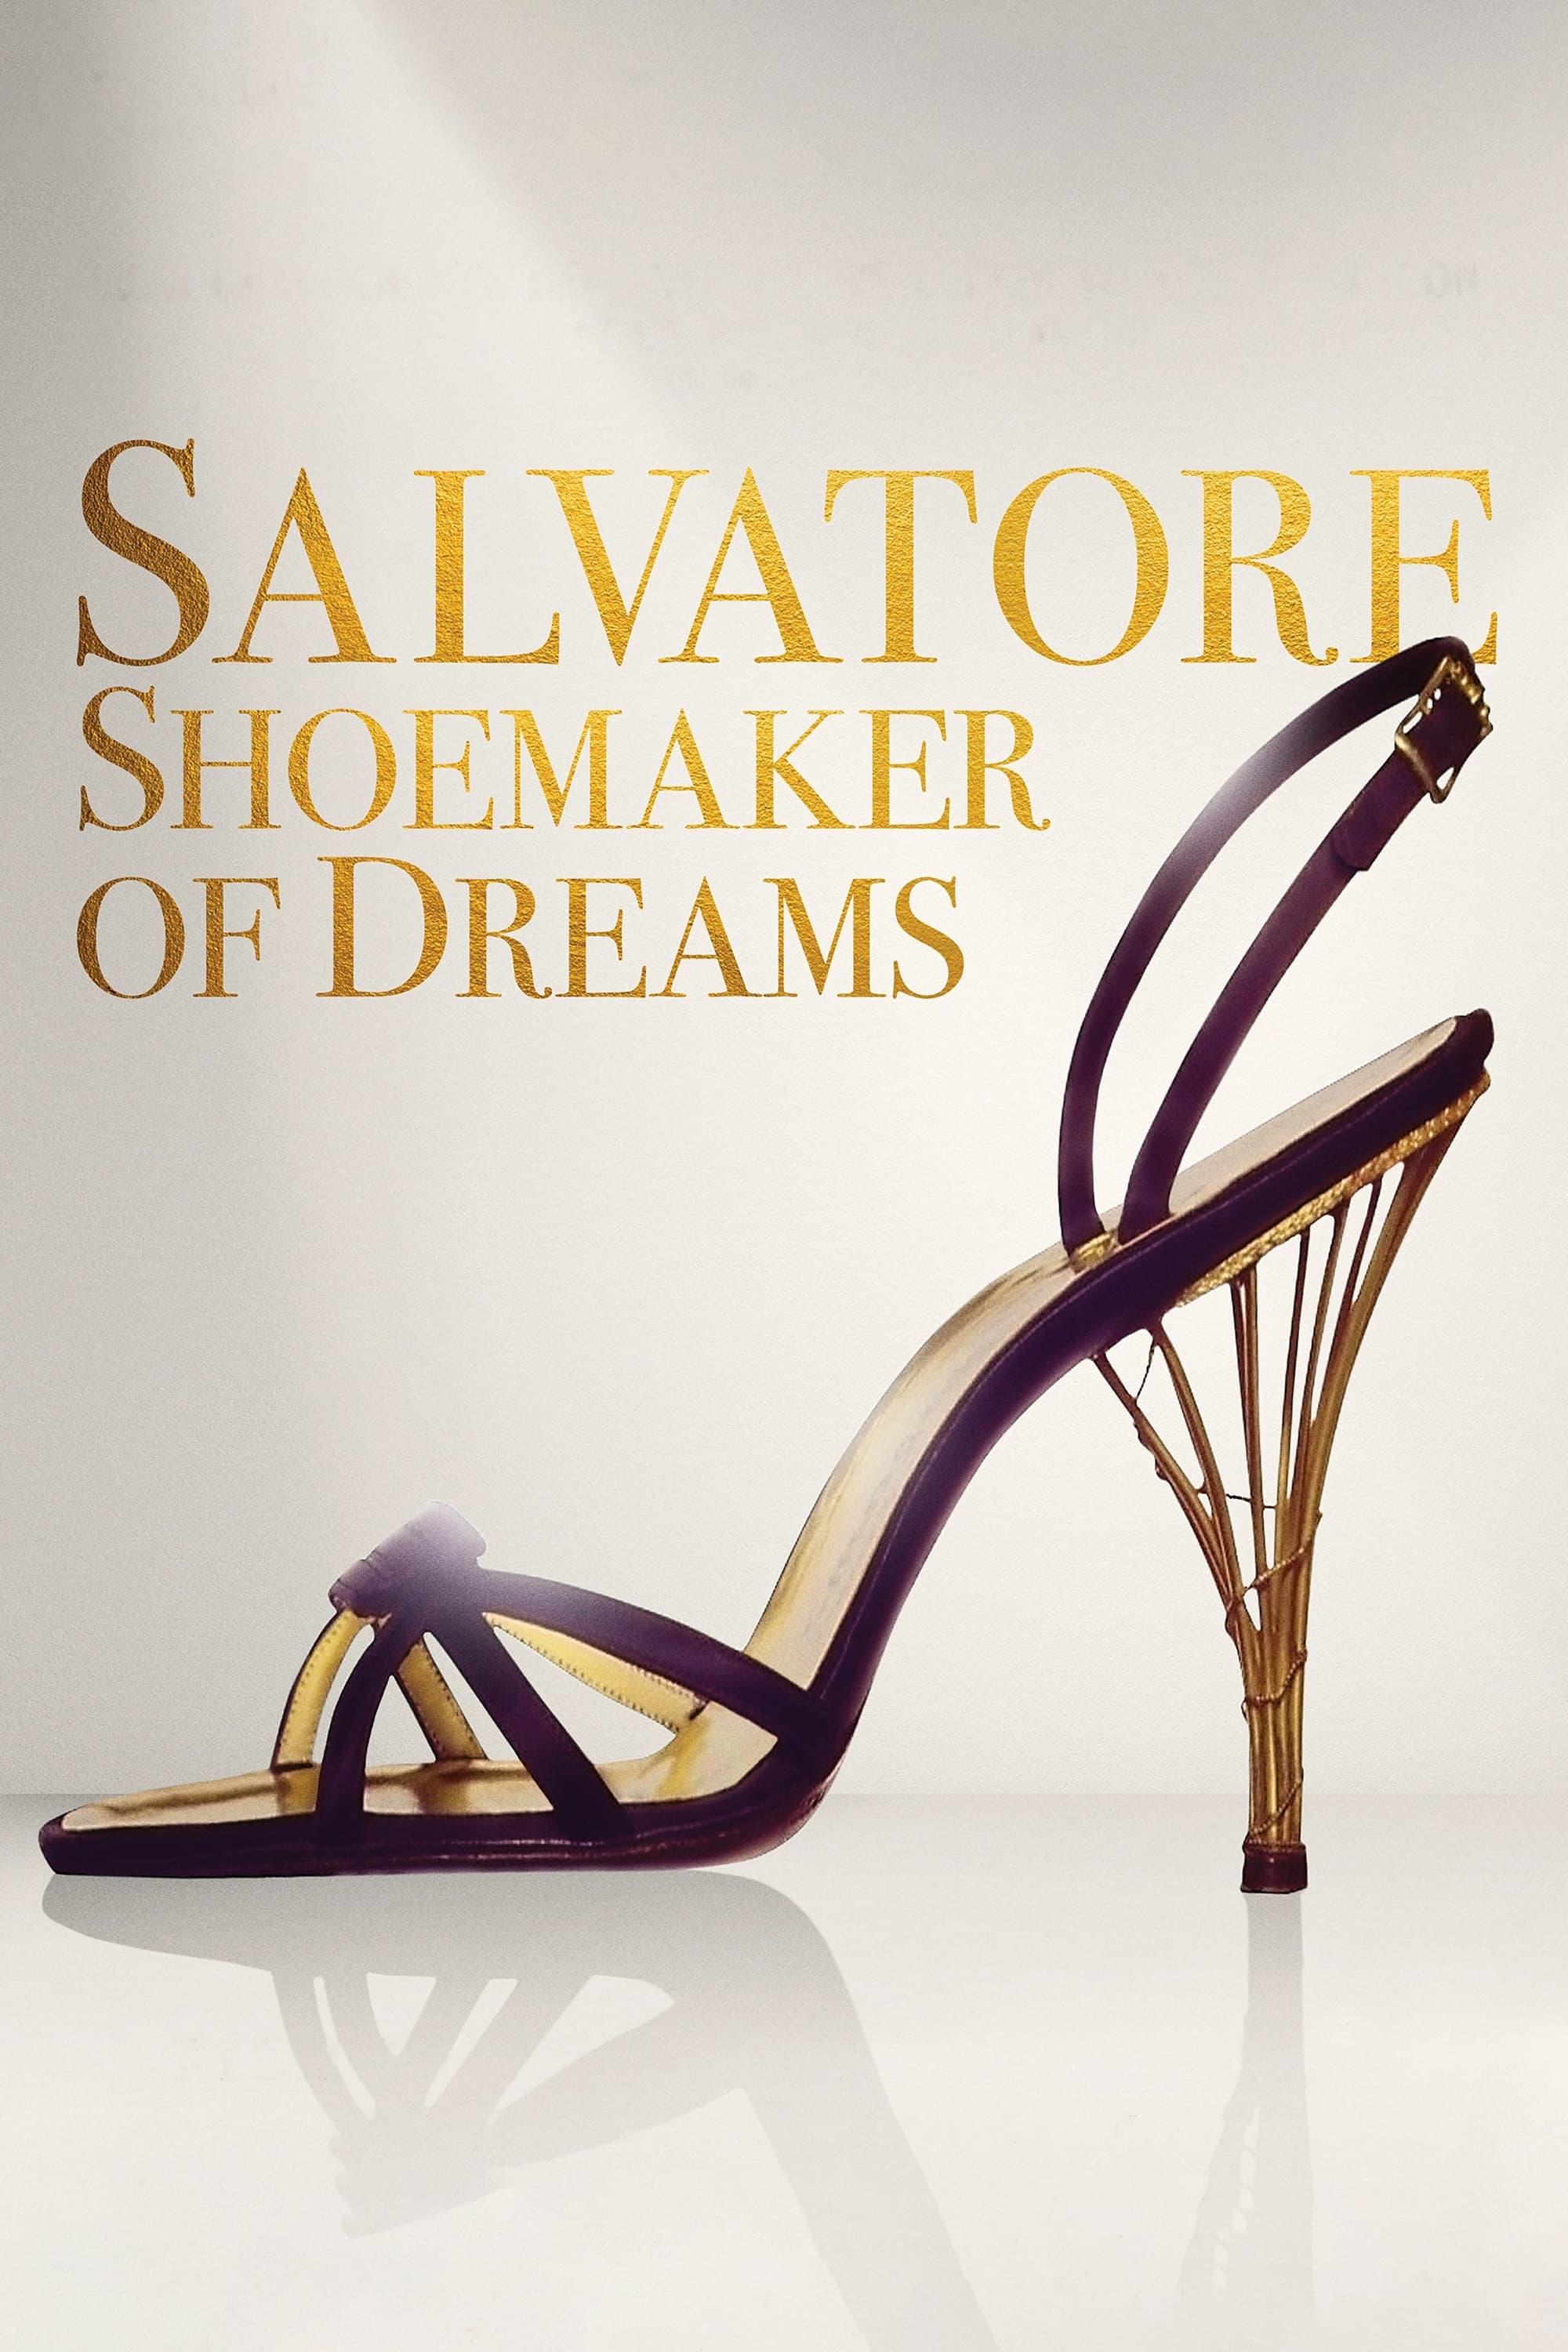 Salvatore: Shoemaker of Dreams poster